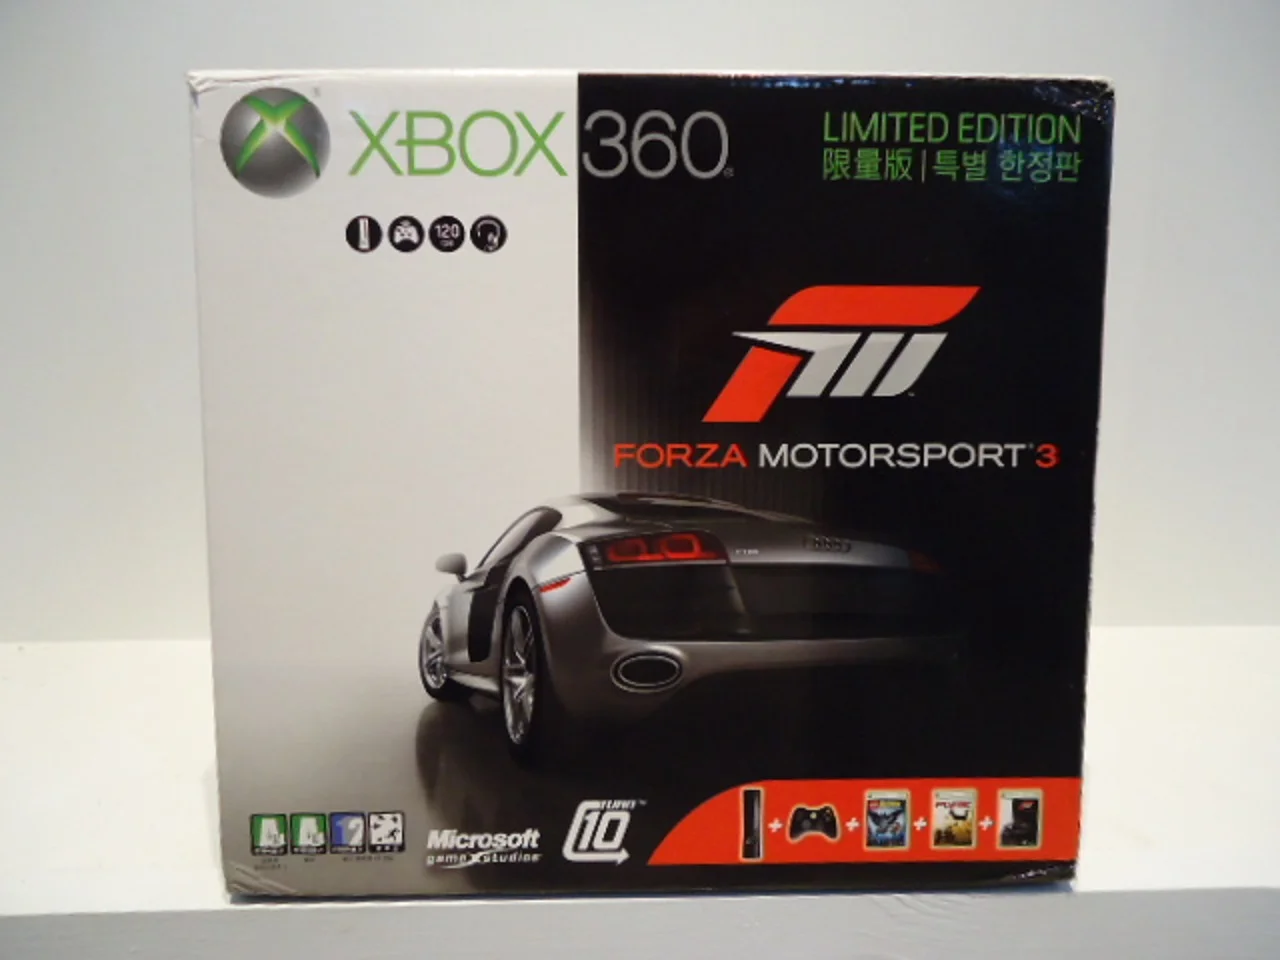  Microsoft Xbox 360 Forza Motorsport 3 Bundle